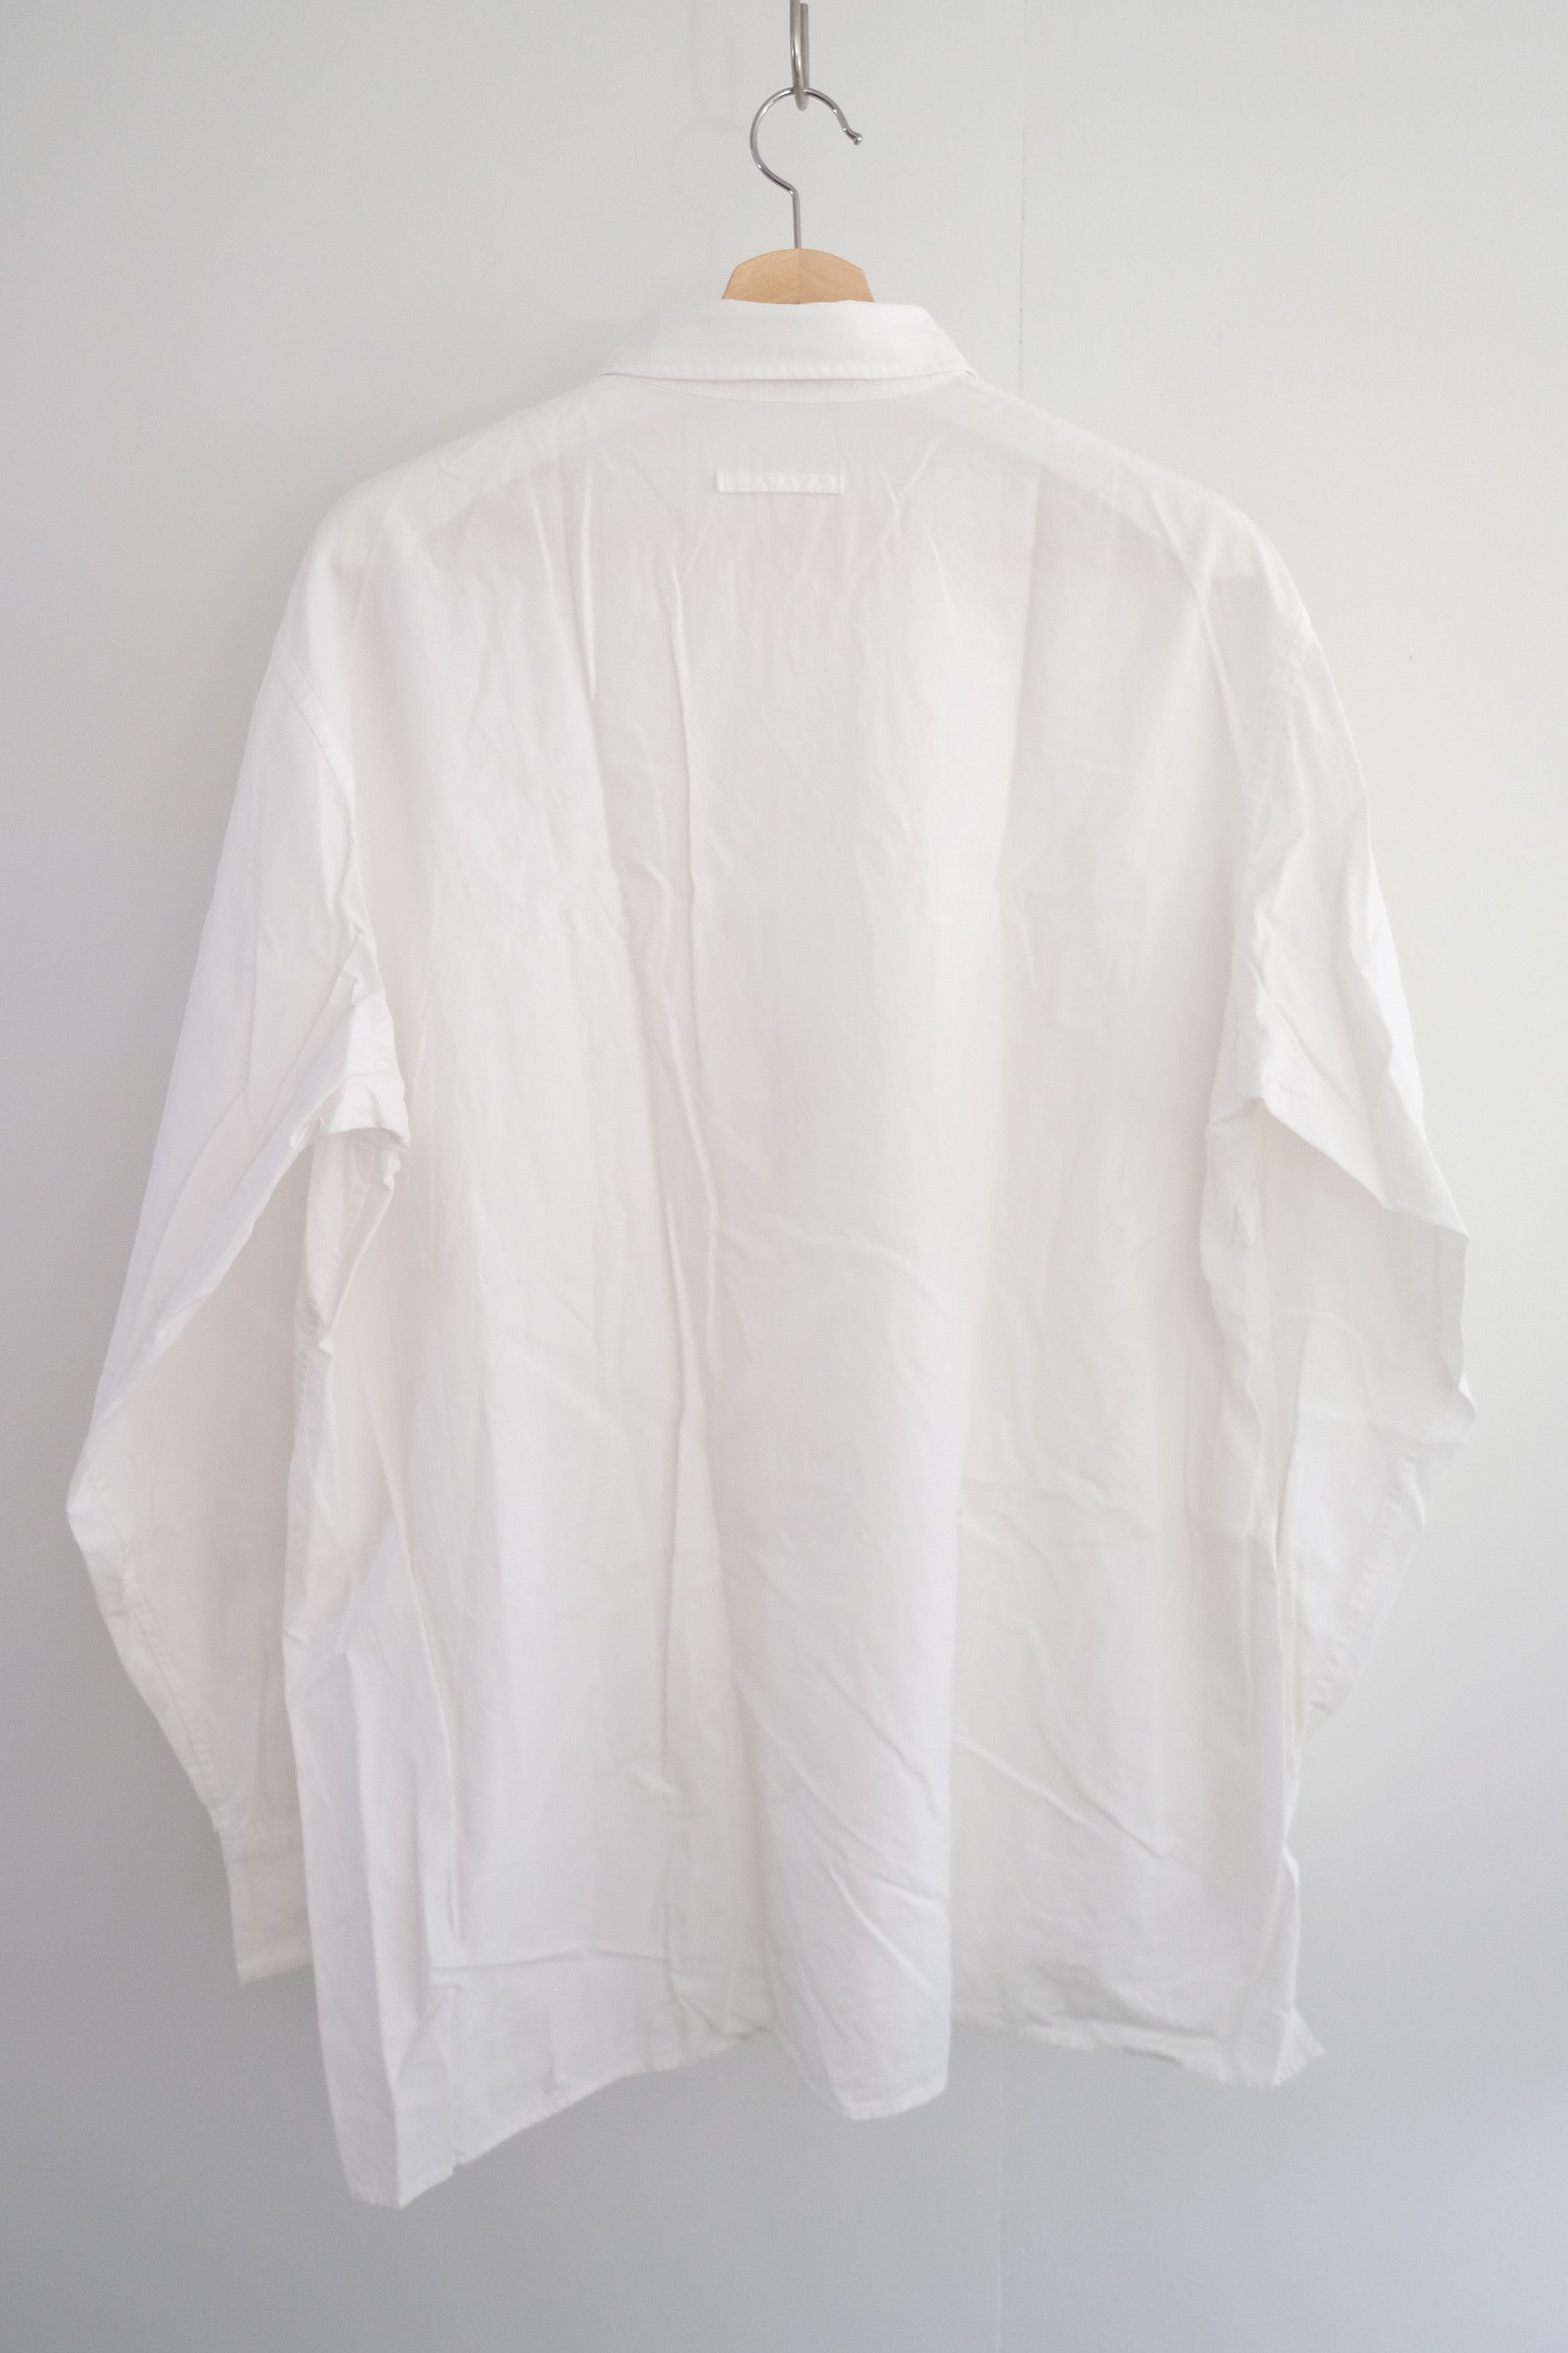 🎐 YFM [2000s] Utility Shirt with Drop Hem, White - 12